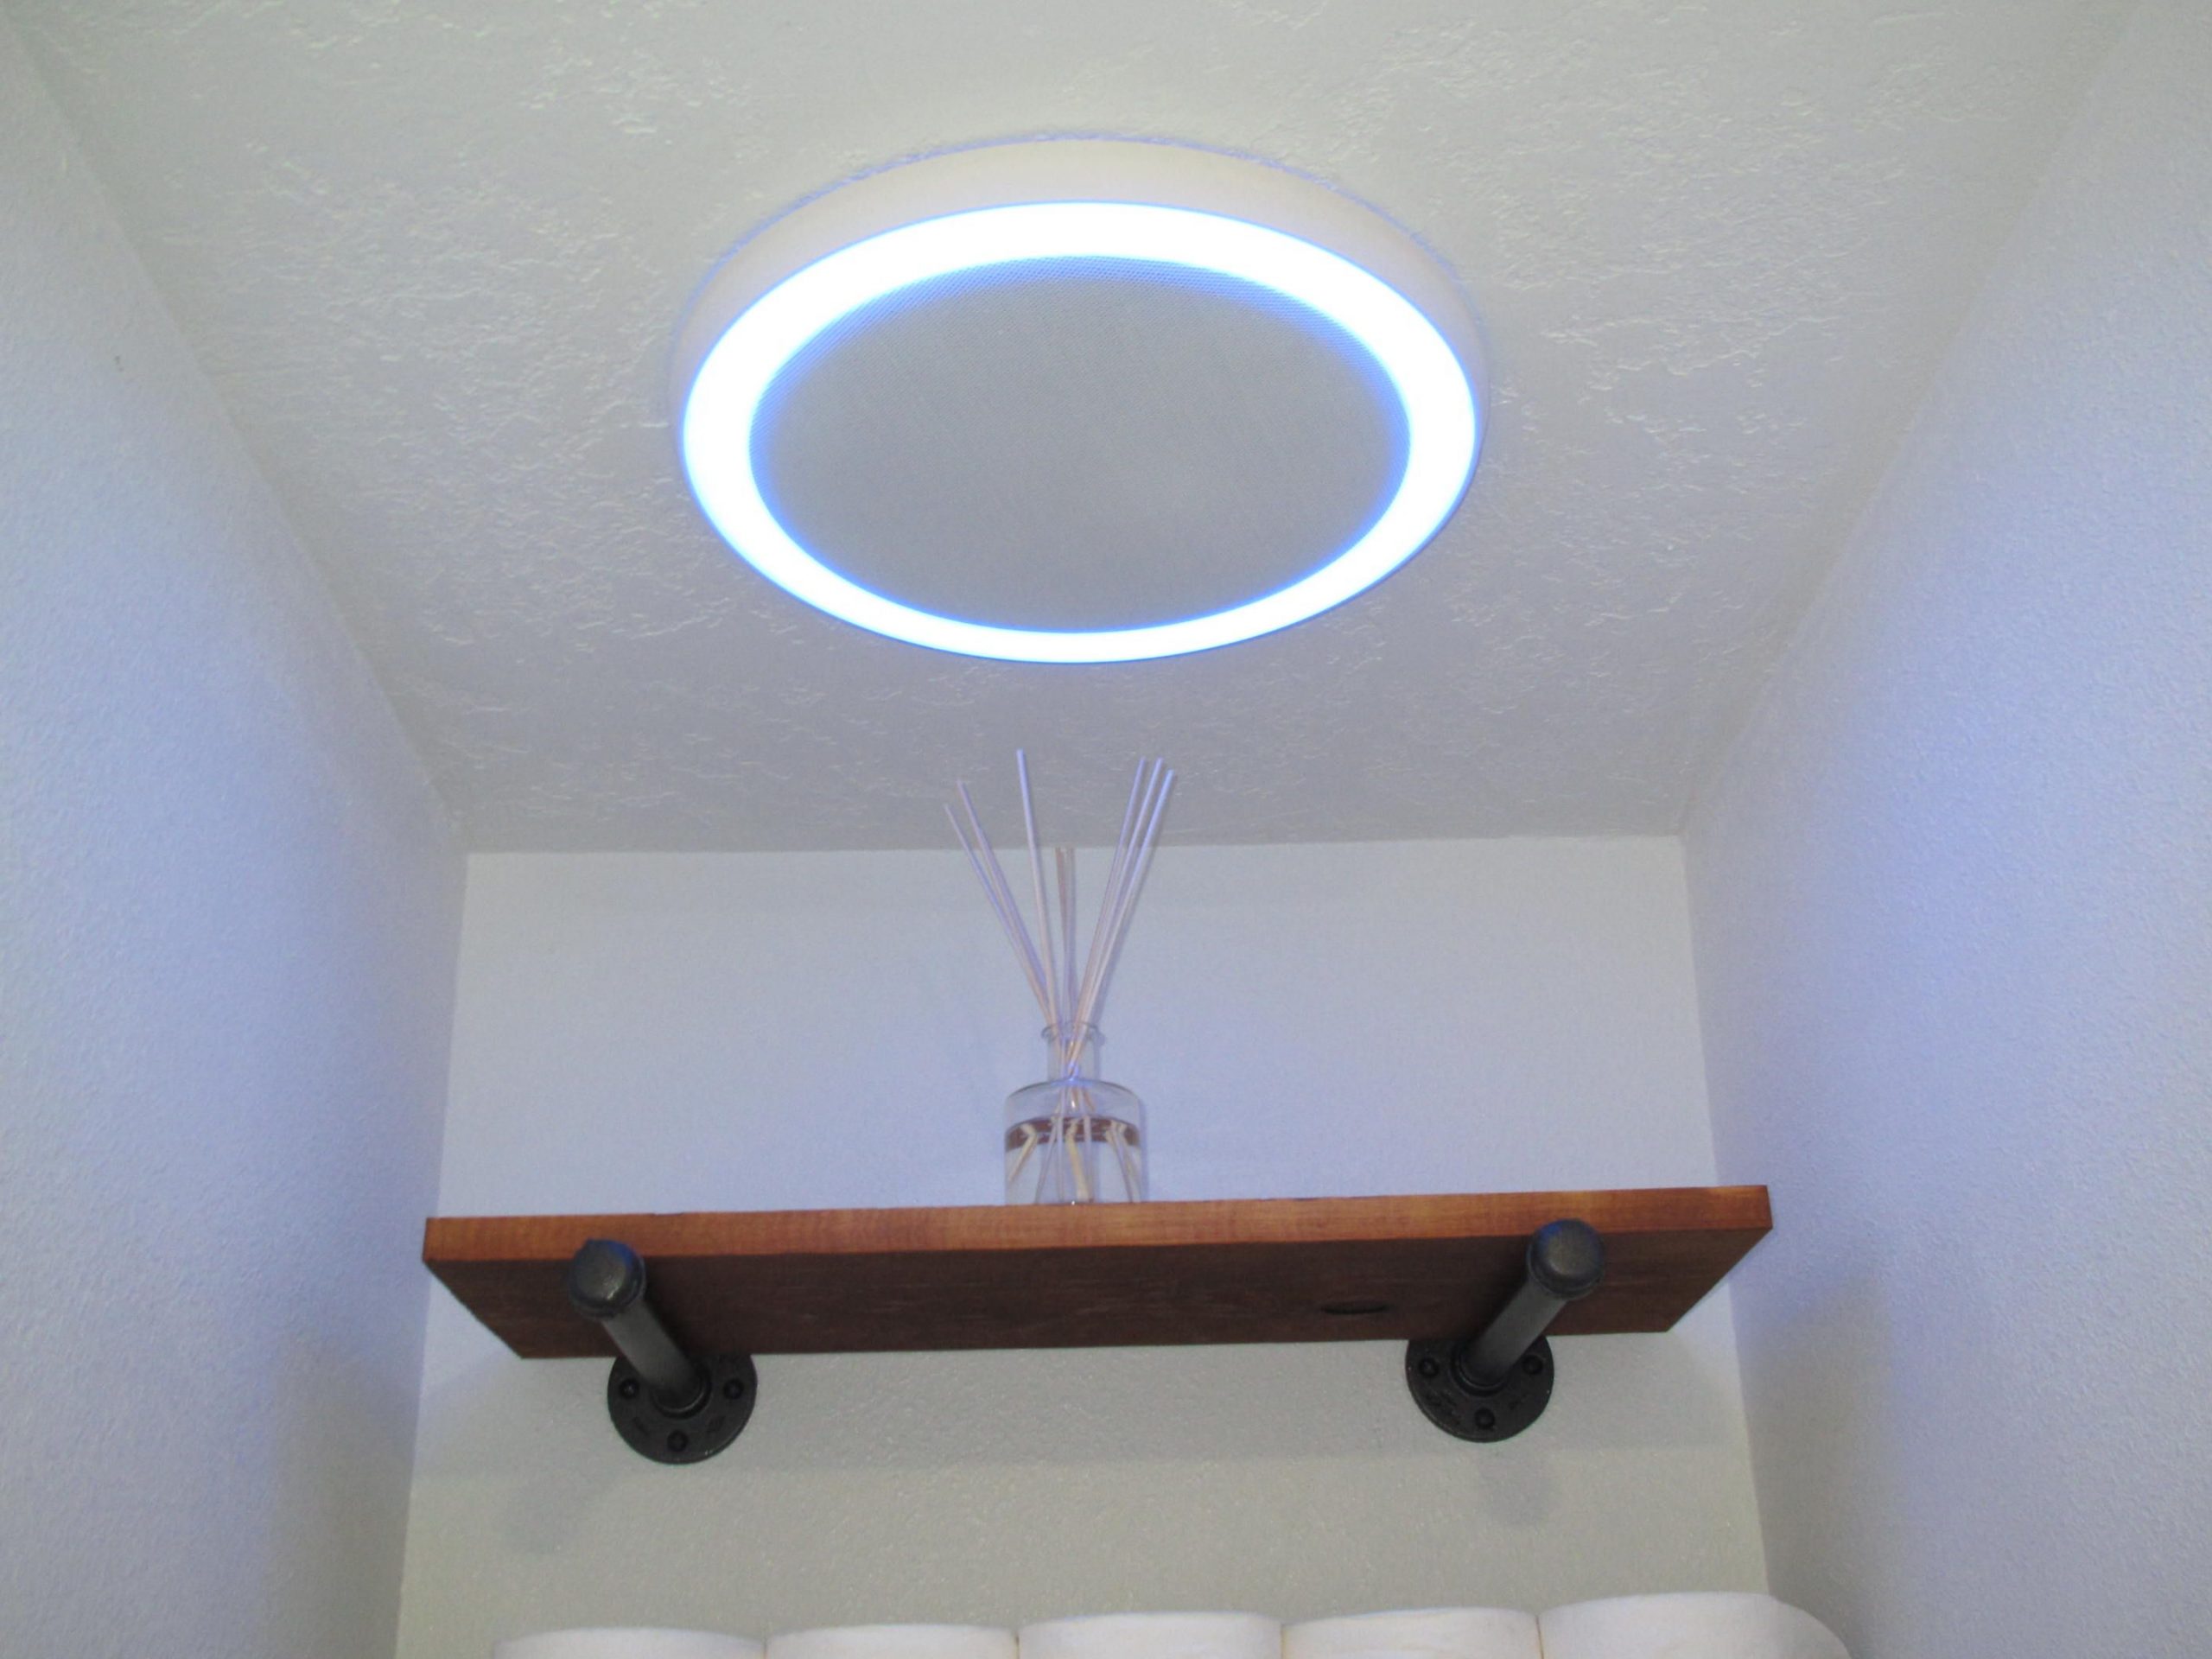 Bathroom Fan Wbluetooth Speaker Light And Blue Nightlight intended for size 2816 X 2112